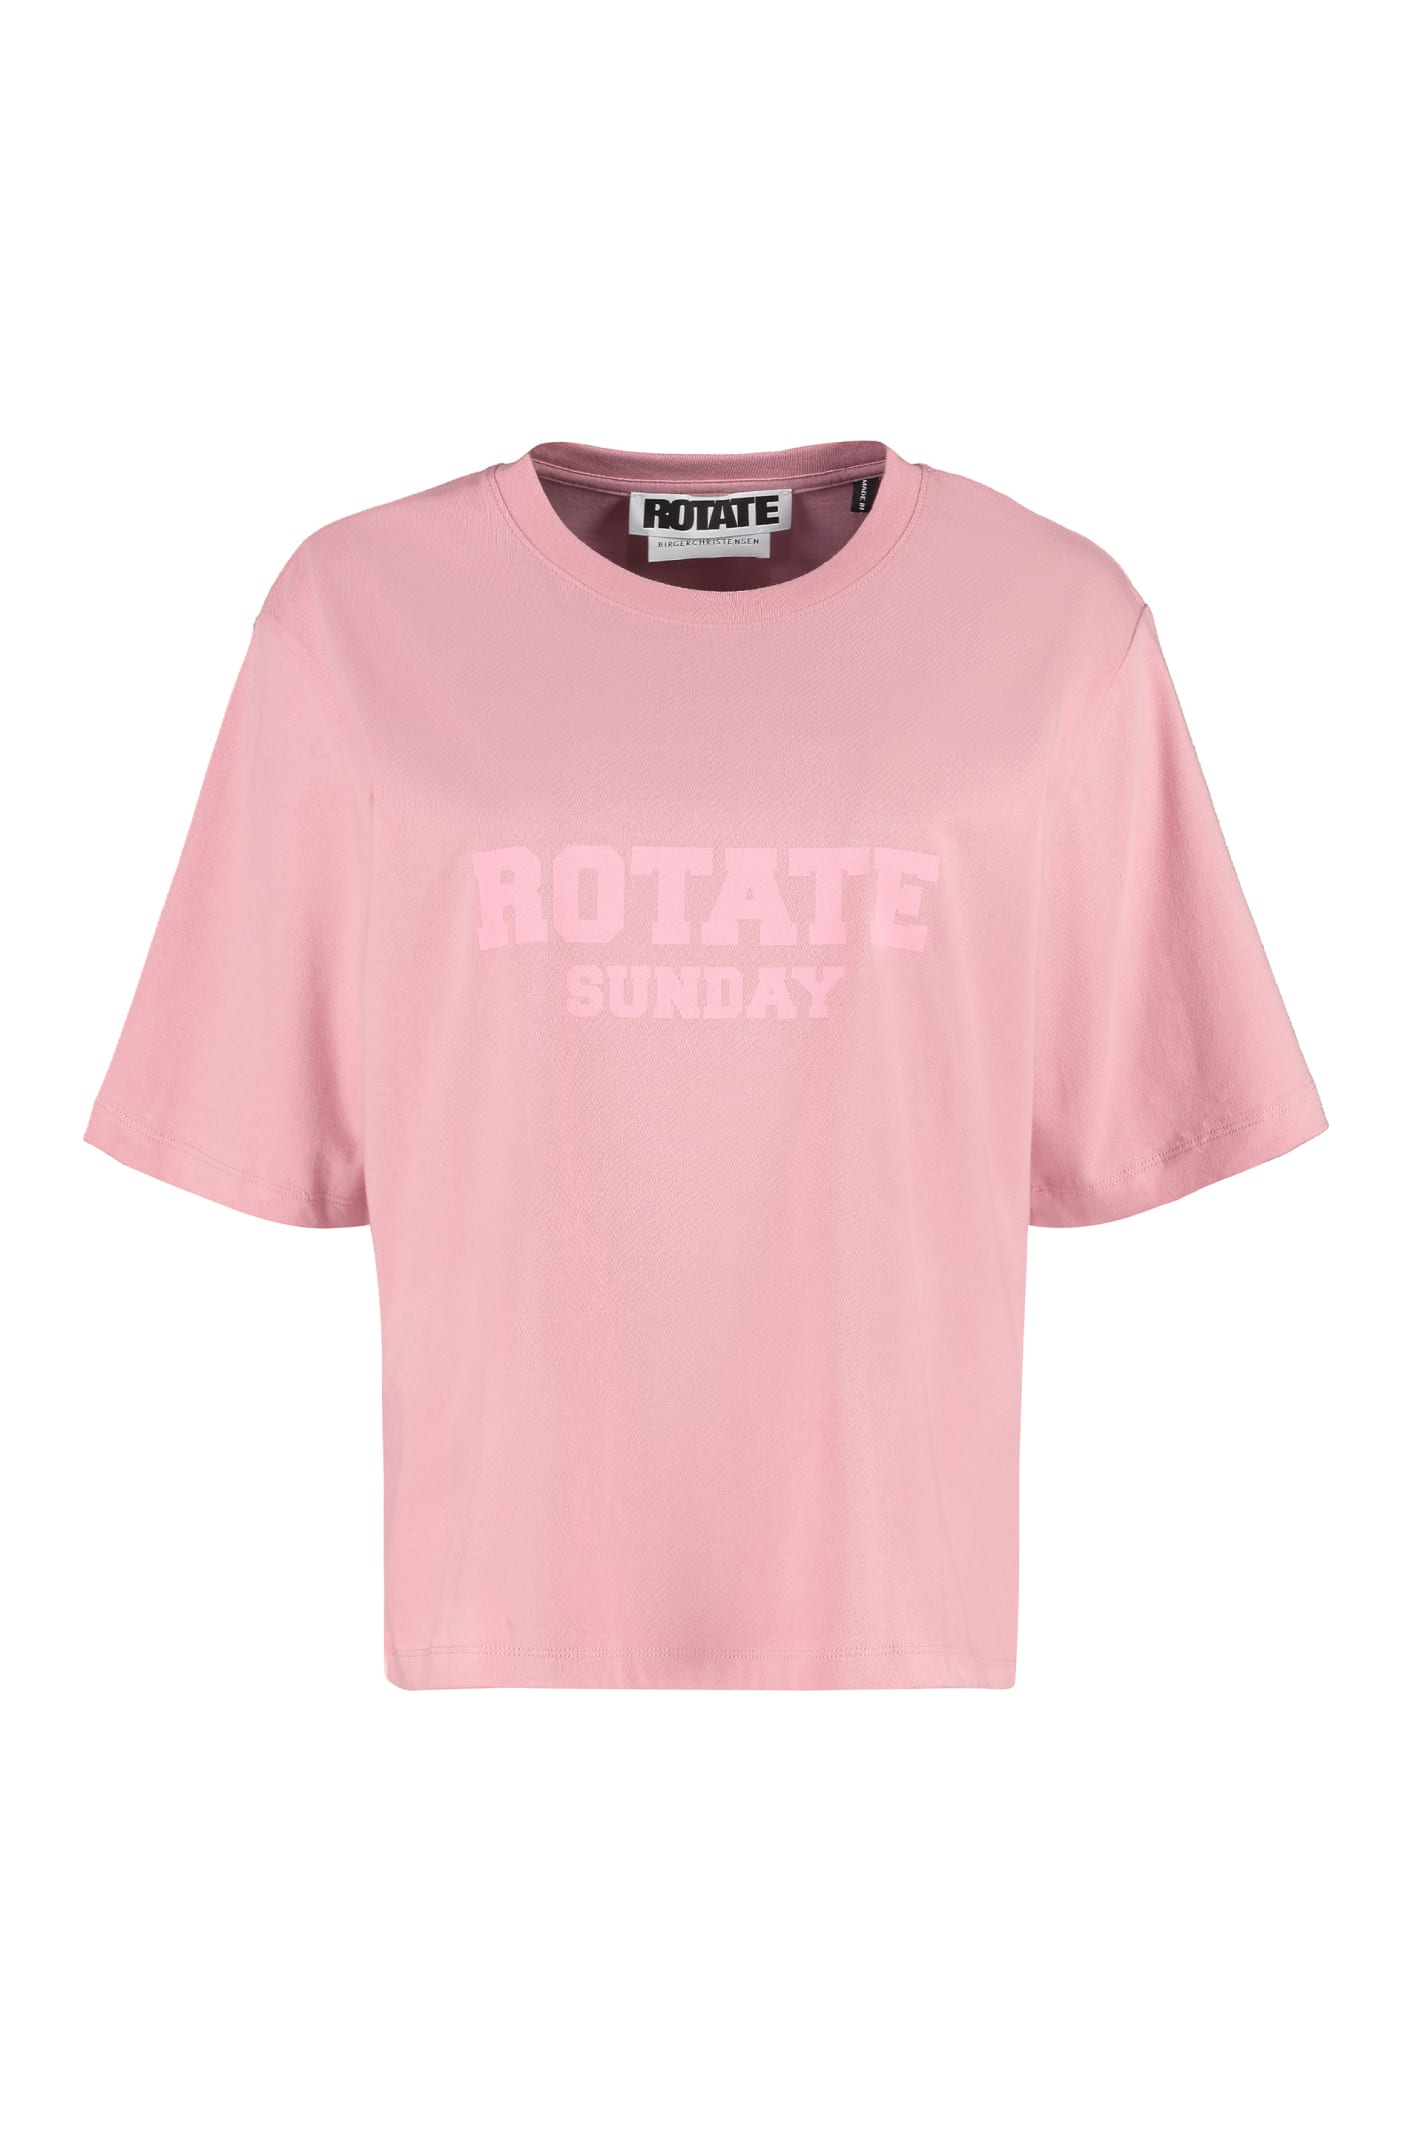 Rotate by Birger Christensen Aster Logo Cotton T-shirt - Rotate Sunday